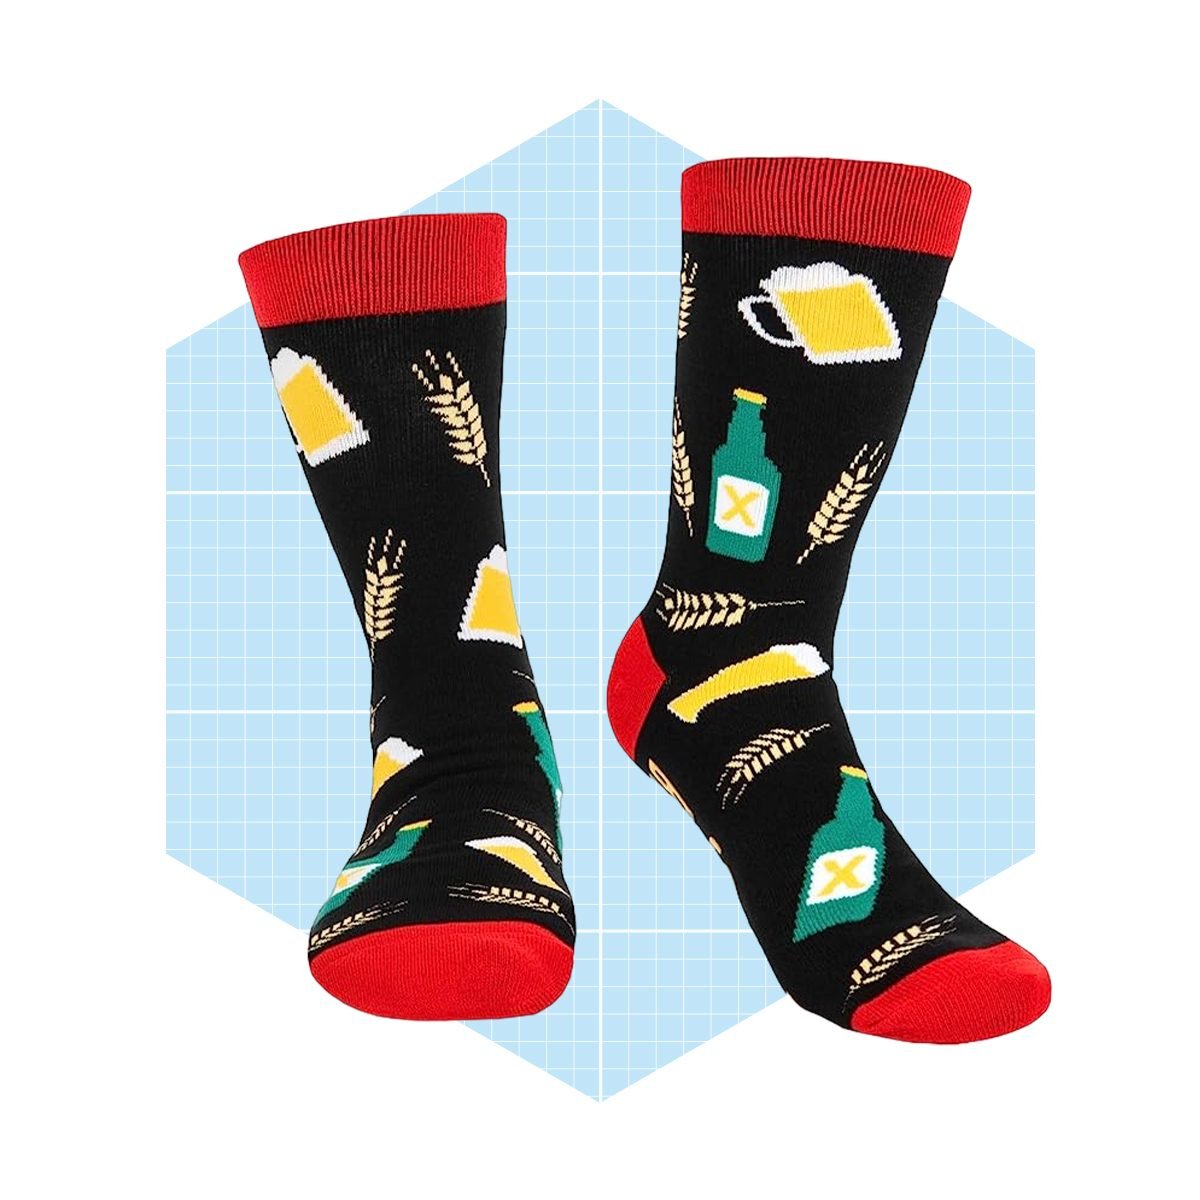 Funny Golf Socks Ecomm Via Amazon.com